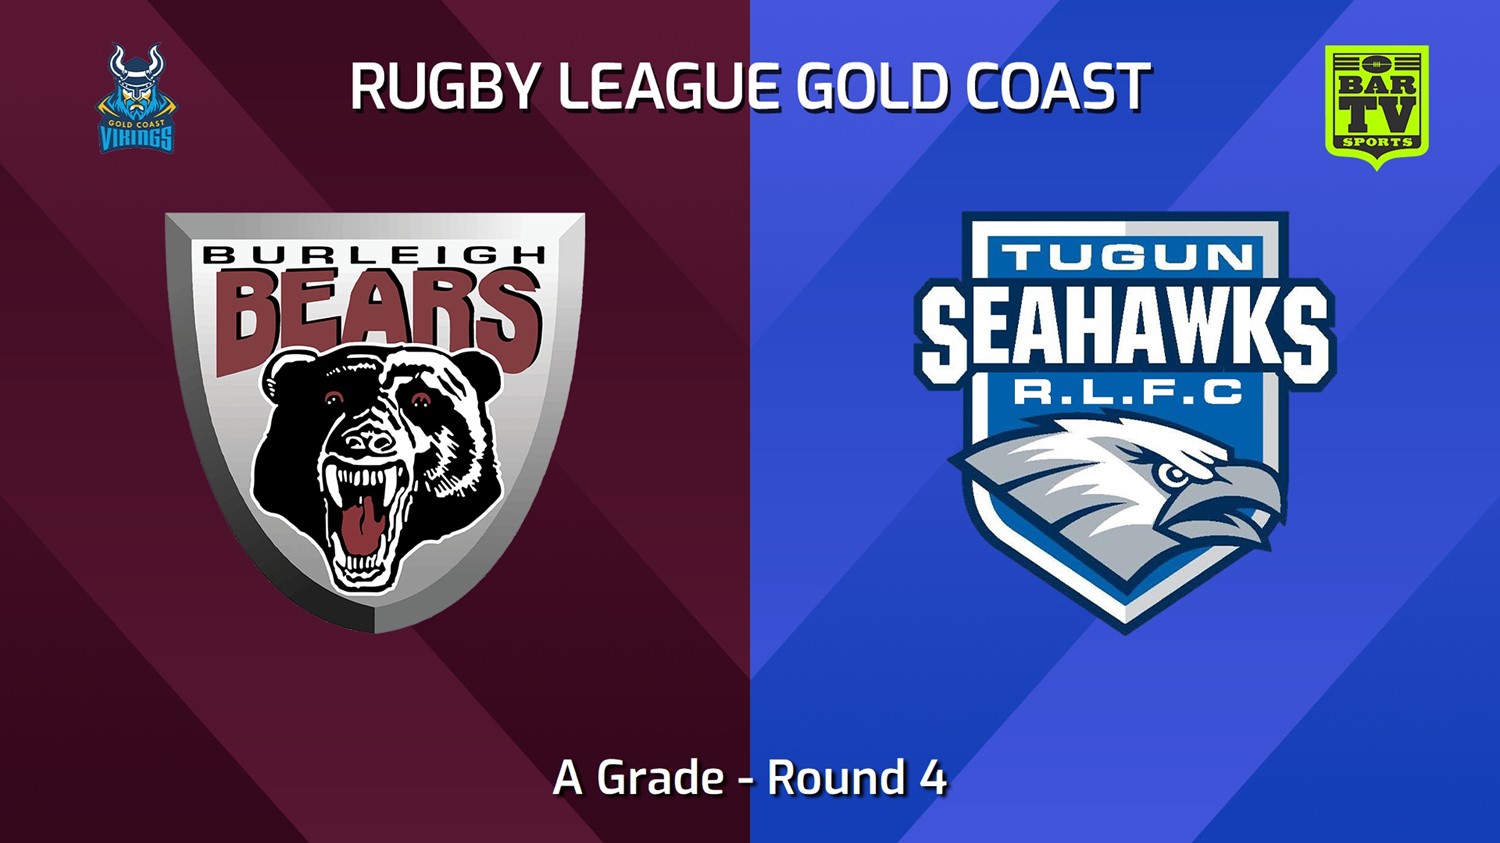 240512-video-Gold Coast Round 4 - A Grade - Burleigh Bears v Tugun Seahawks Minigame Slate Image